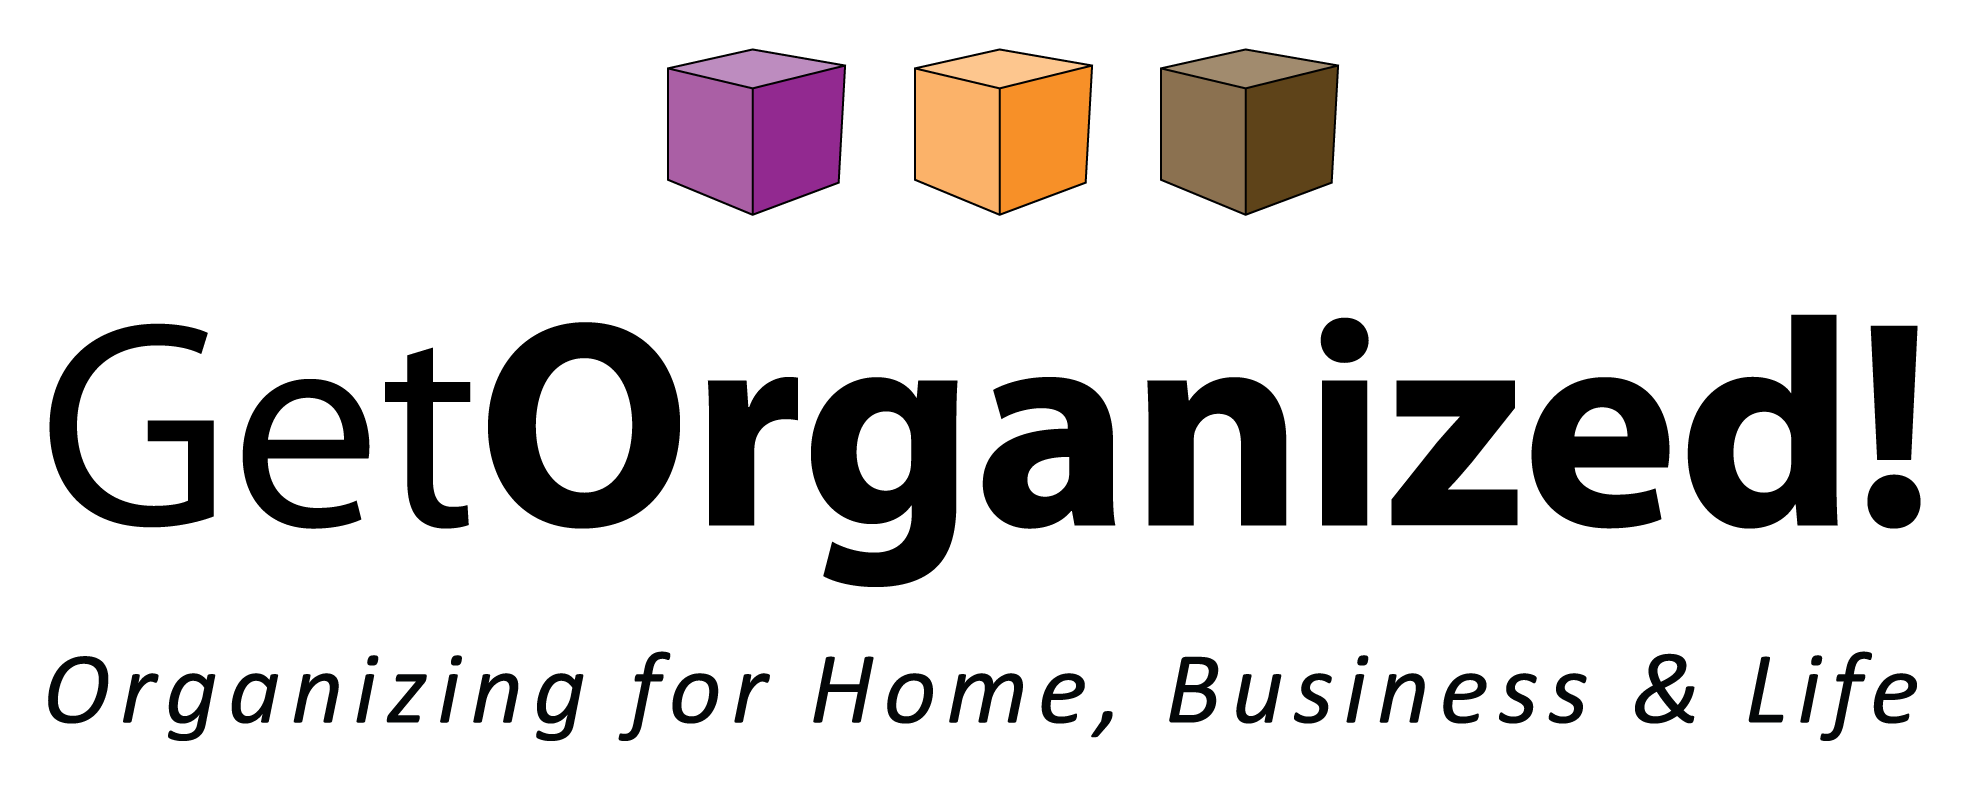 Get Organized! Logo